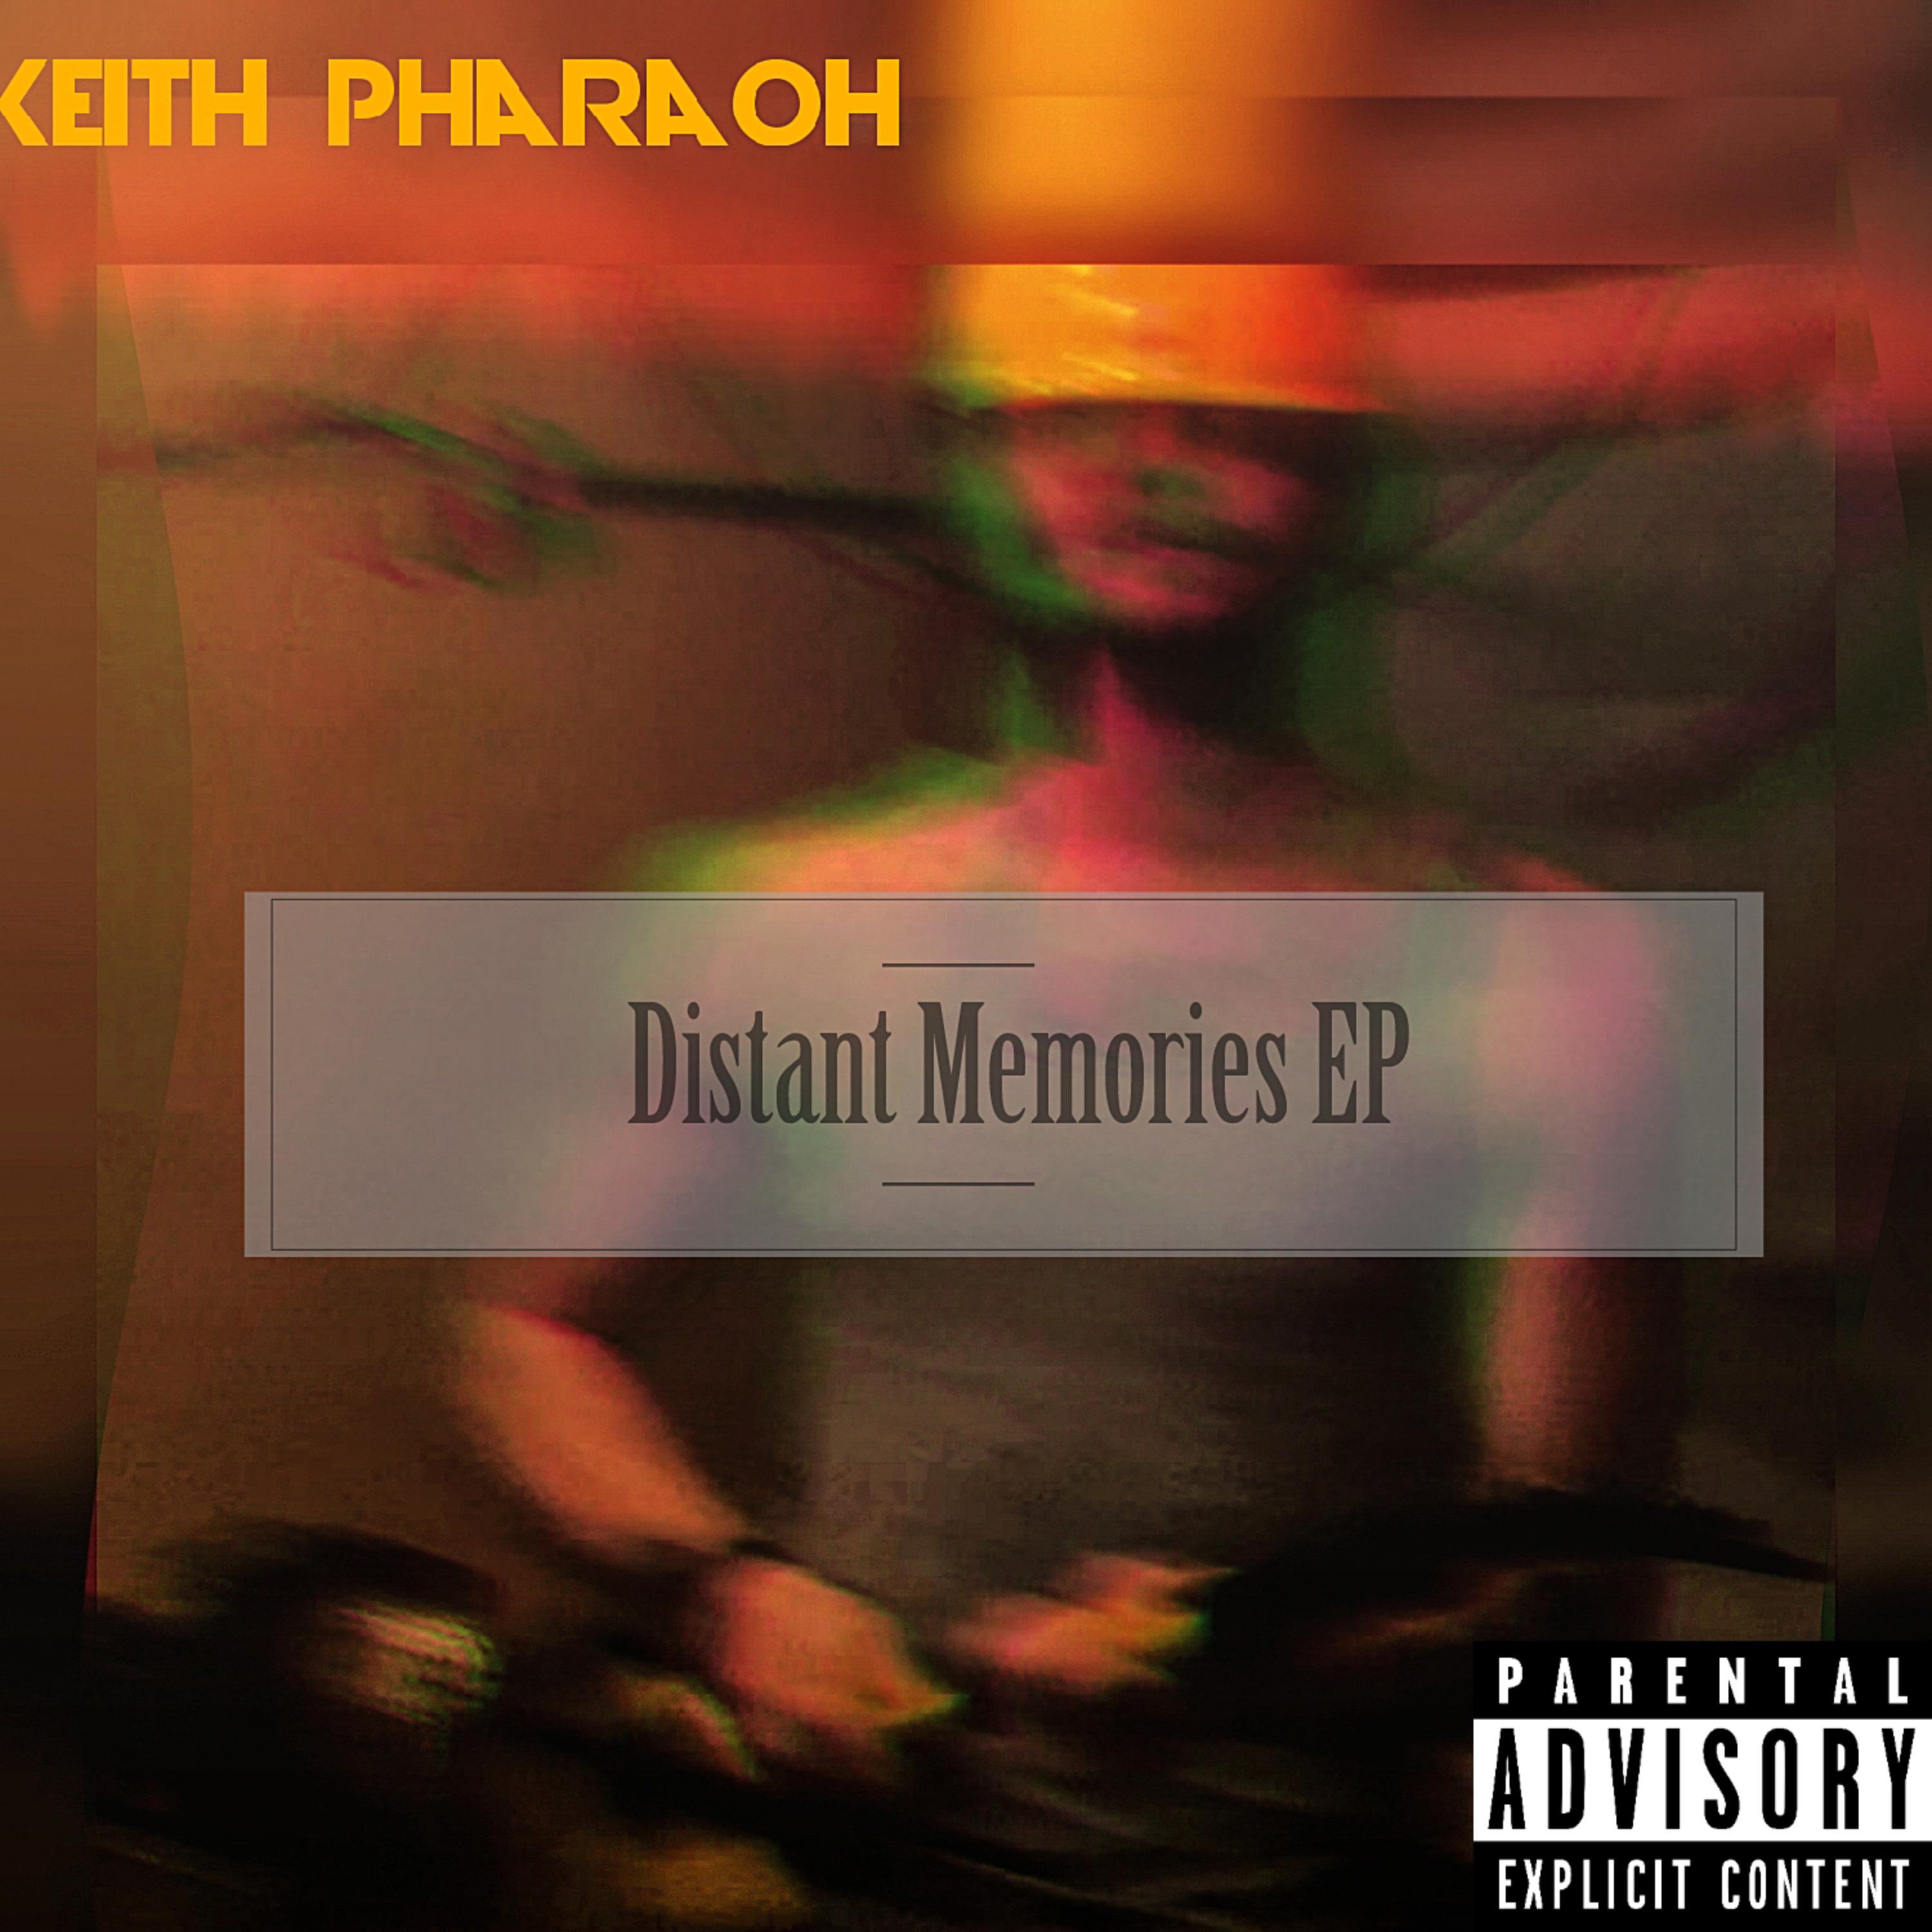 Keith Pharaoh - 1 AM